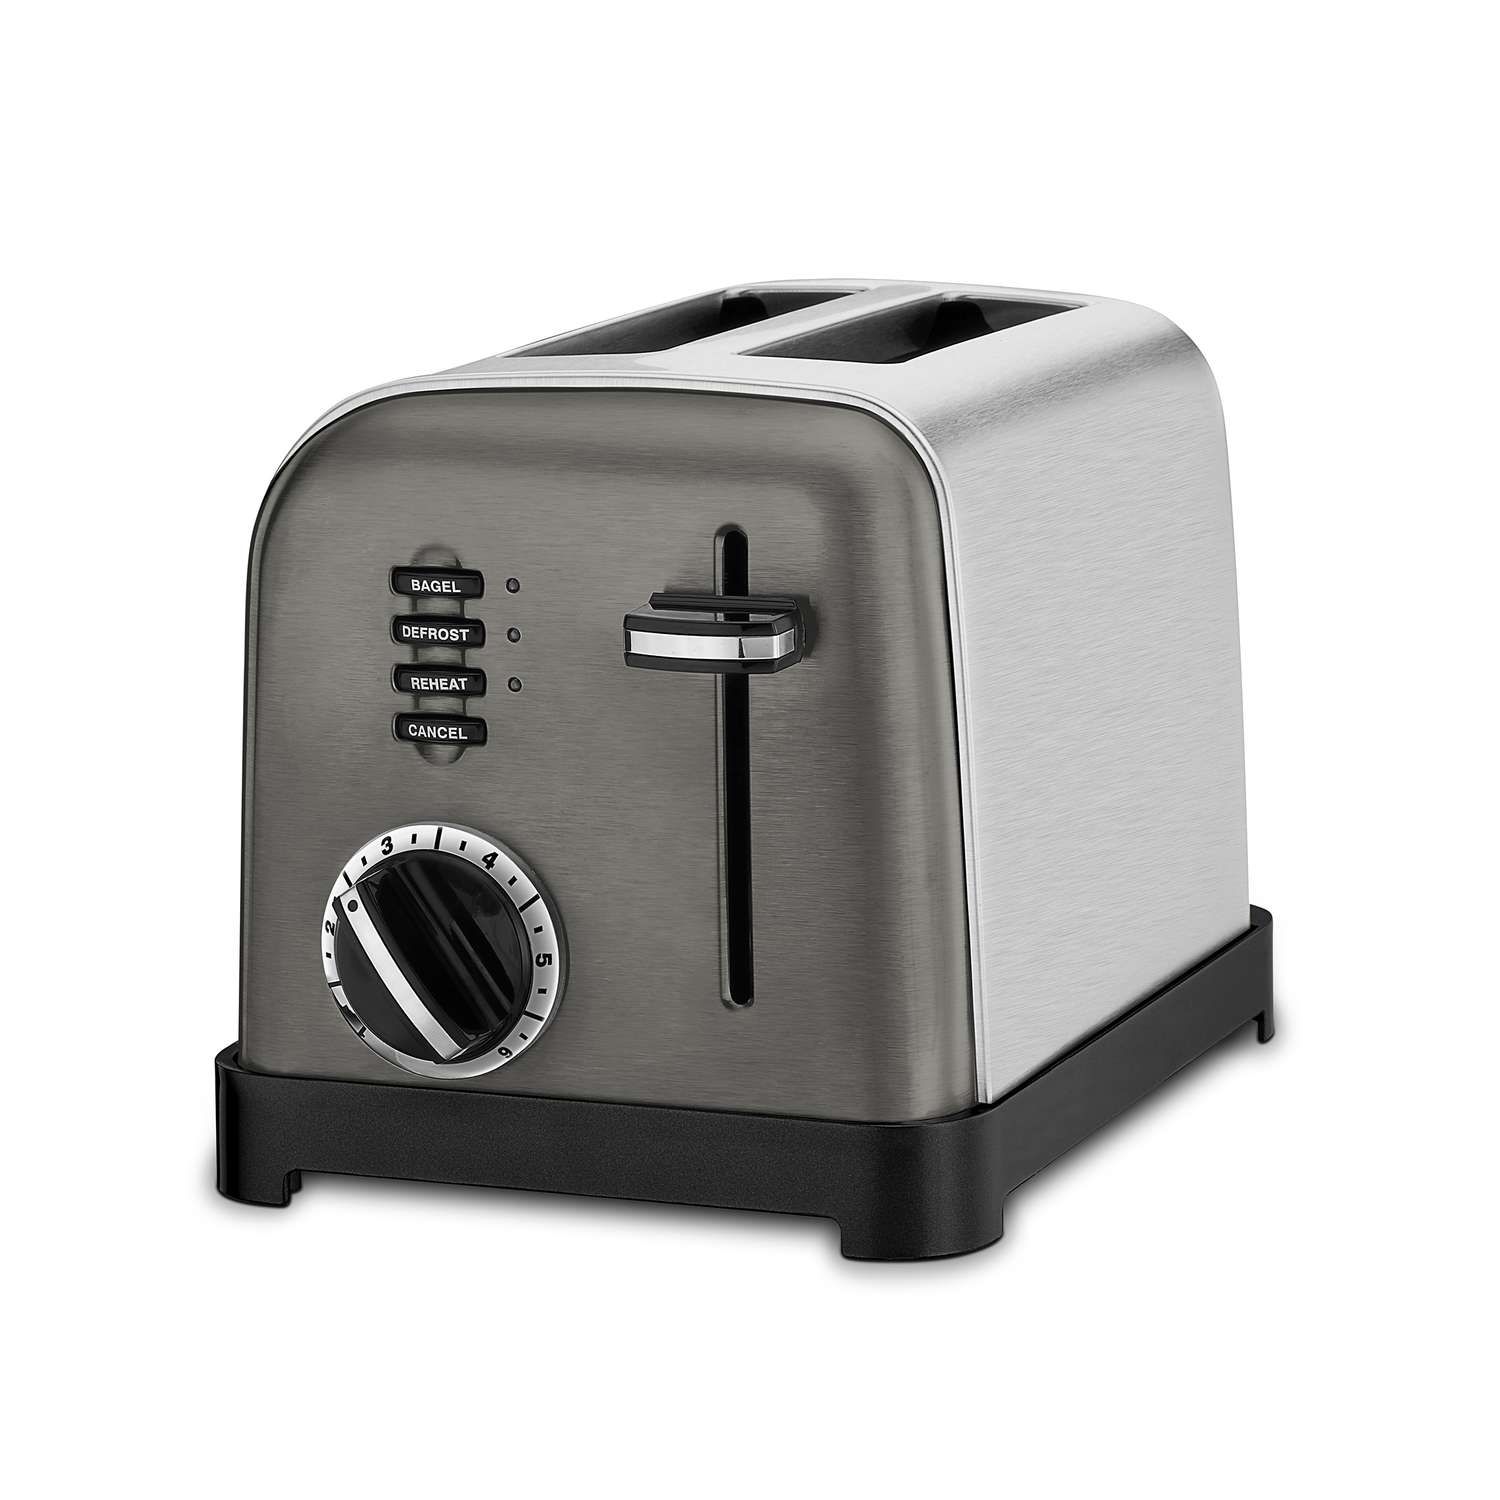  Cuisinart CPT-2500 Long Slot Toaster, Stainless Steel, Silver,  2-slice long slot: Home & Kitchen